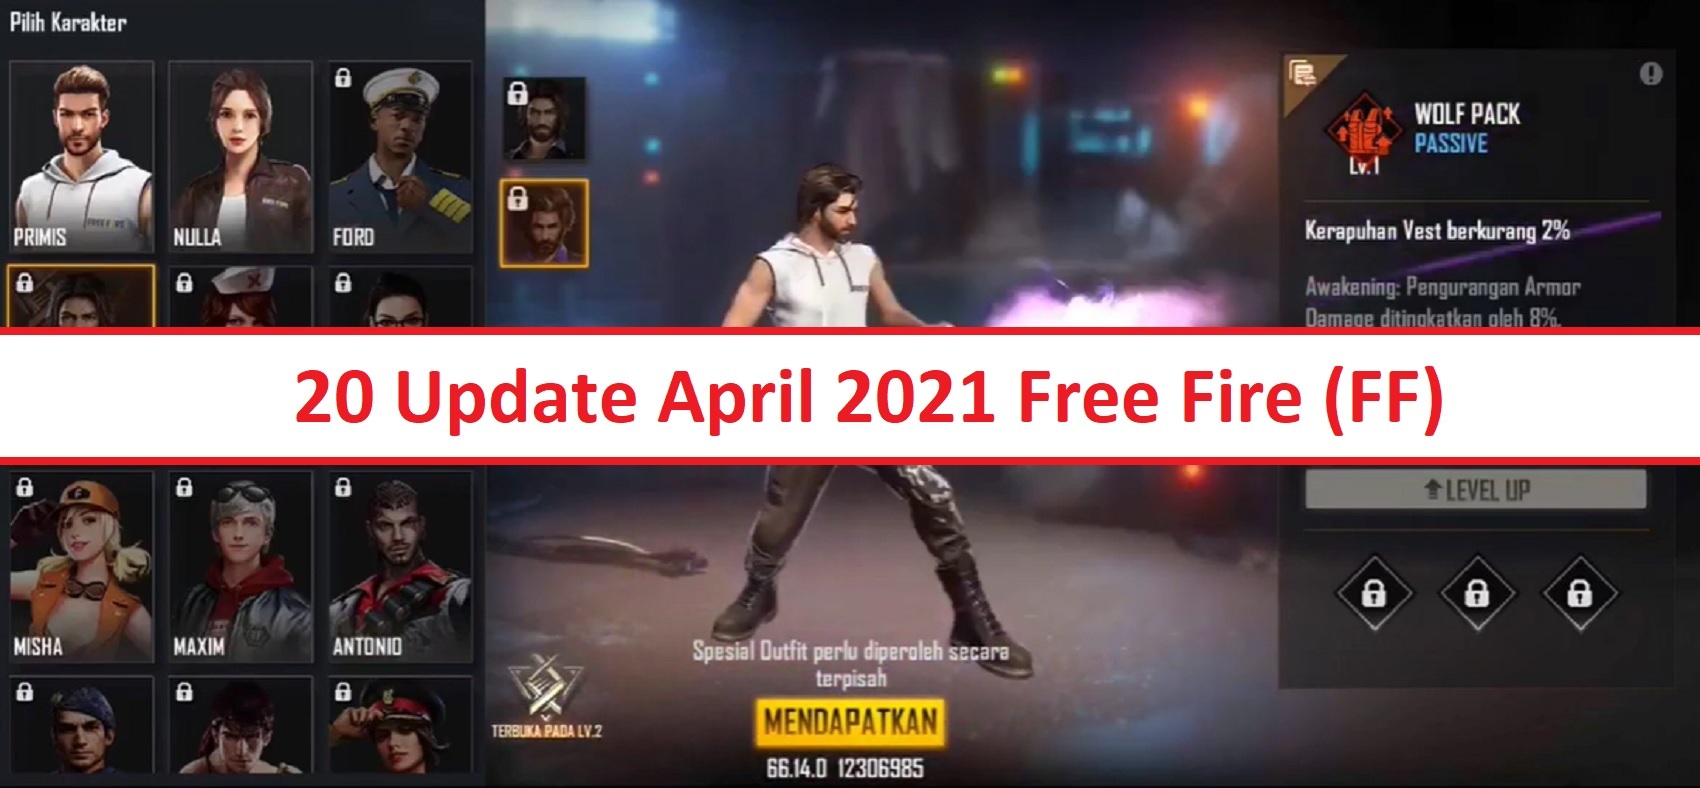 20 Update April 2021 Free Fire FF